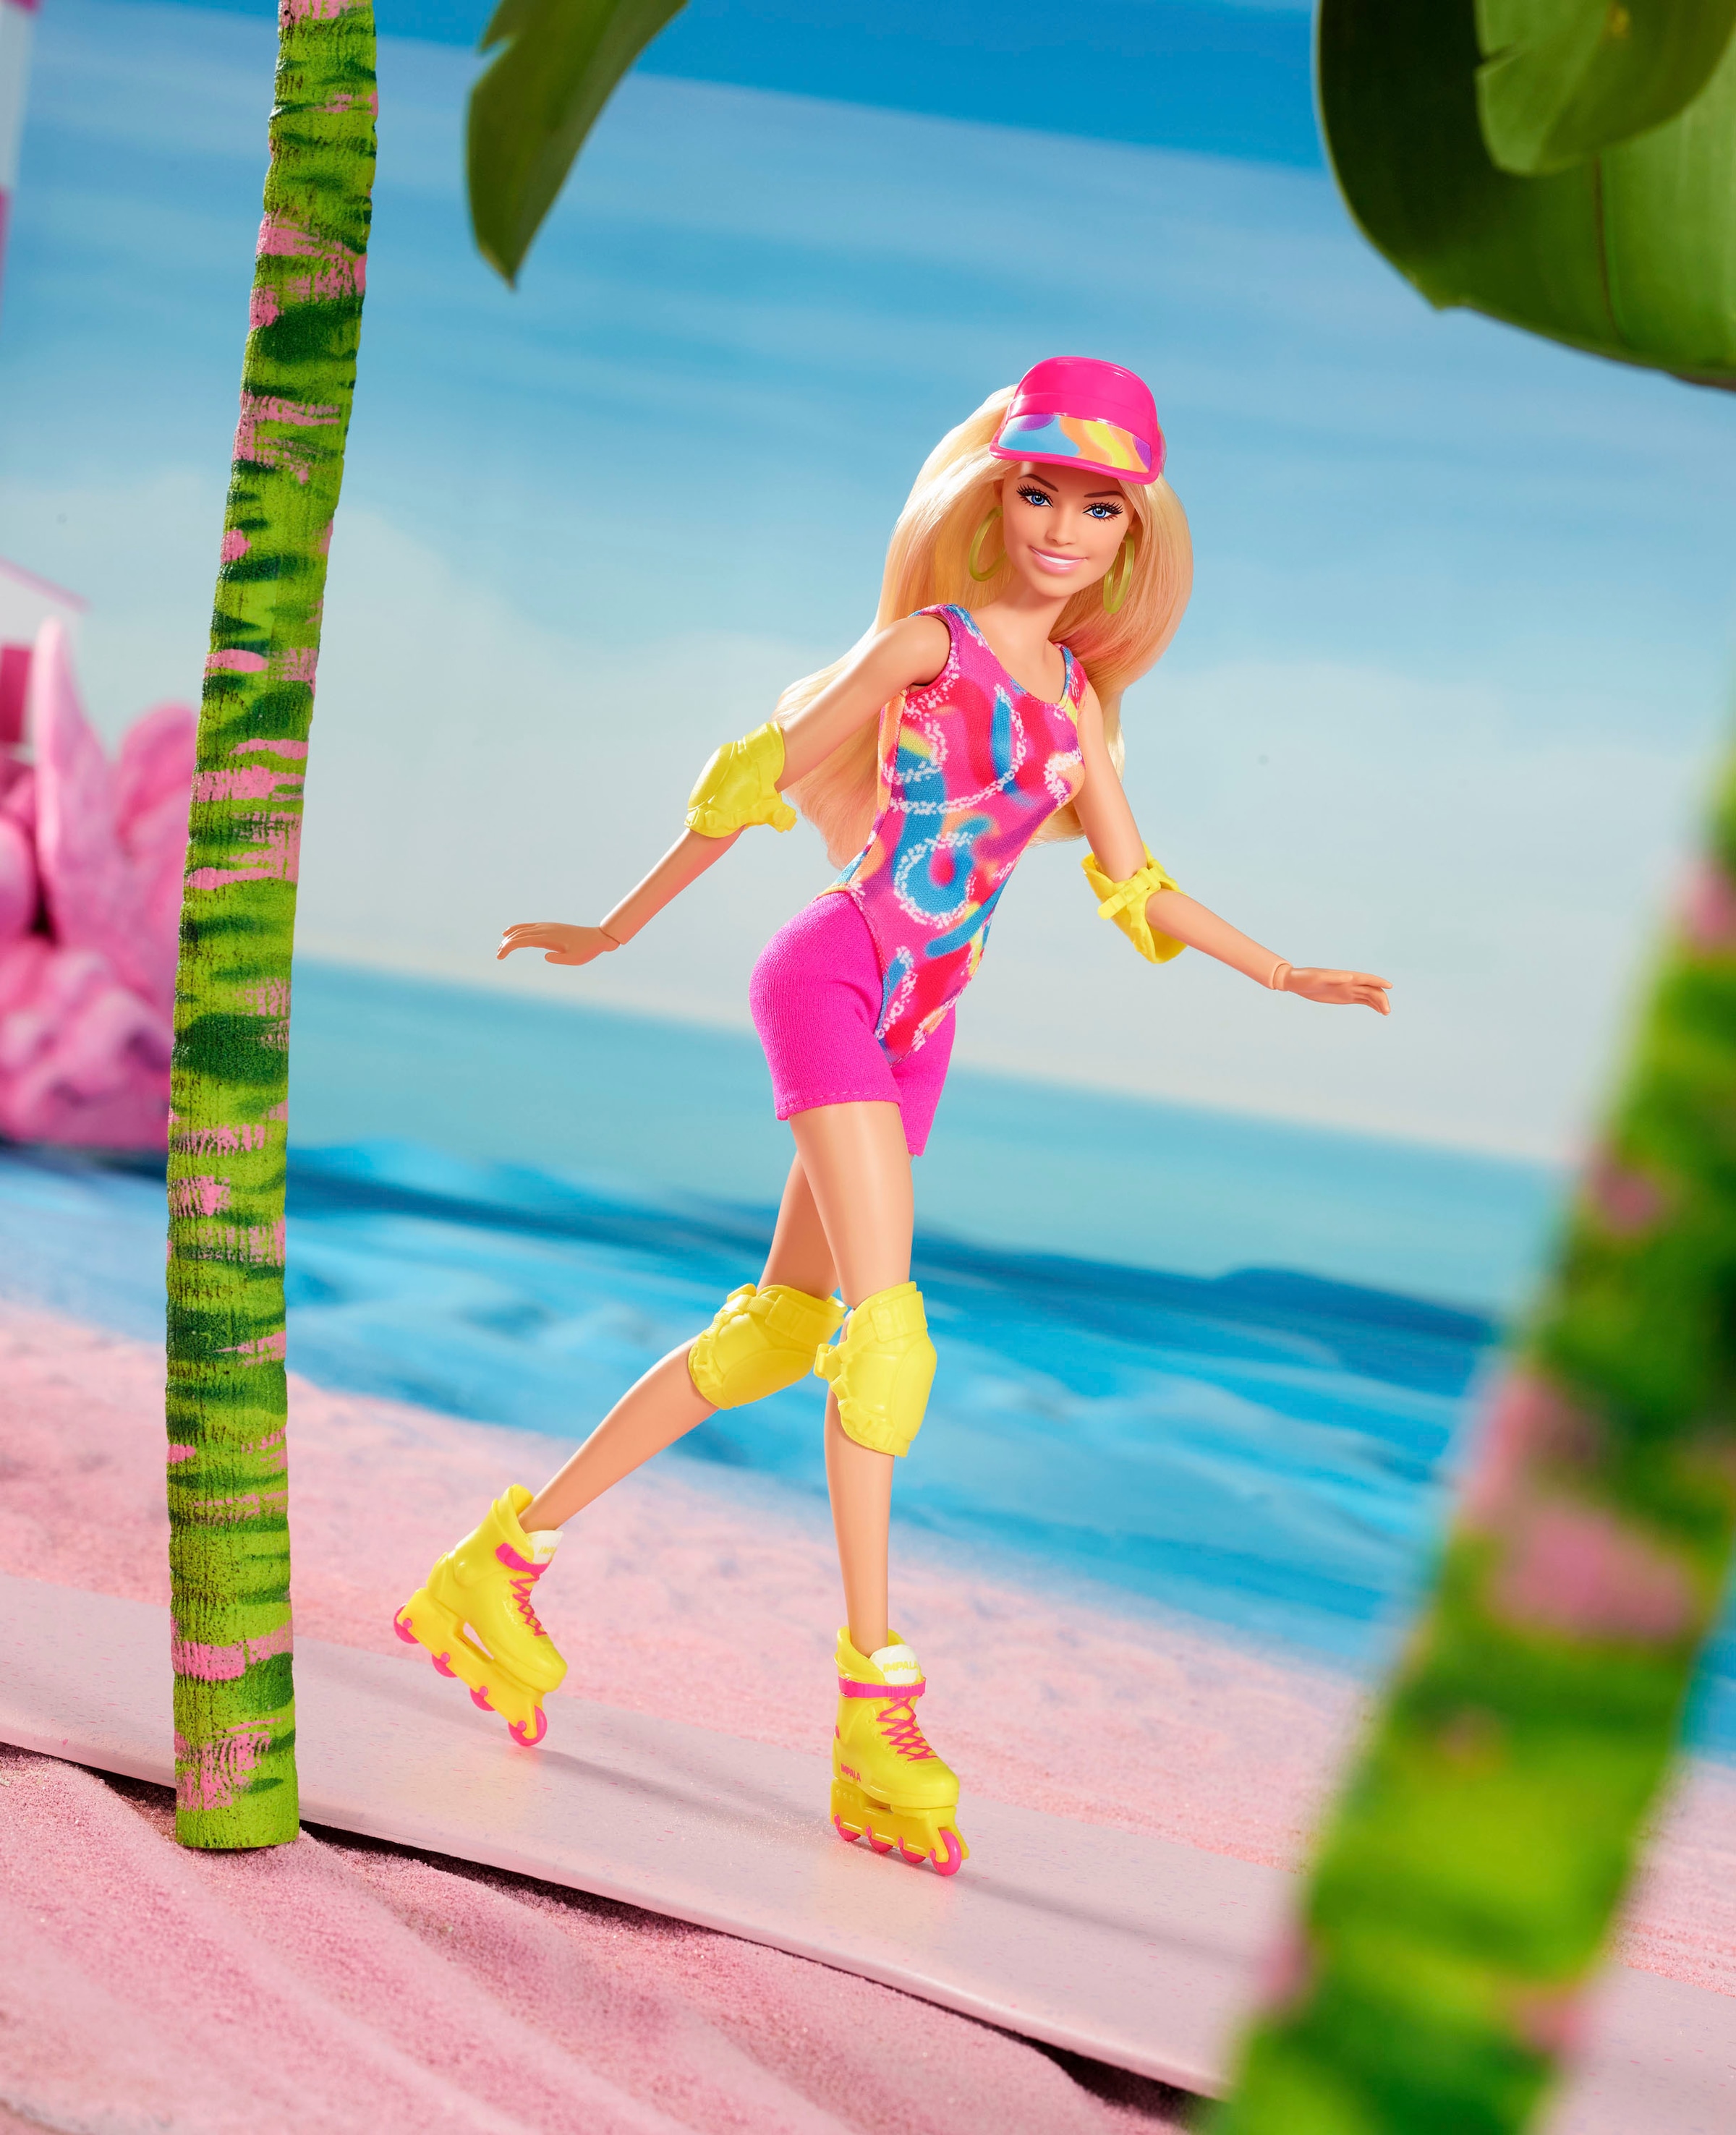 Barbie Anziehpuppe »Barbie Signature The Movie, Margot Robbie im Inlineskating-Outfit«